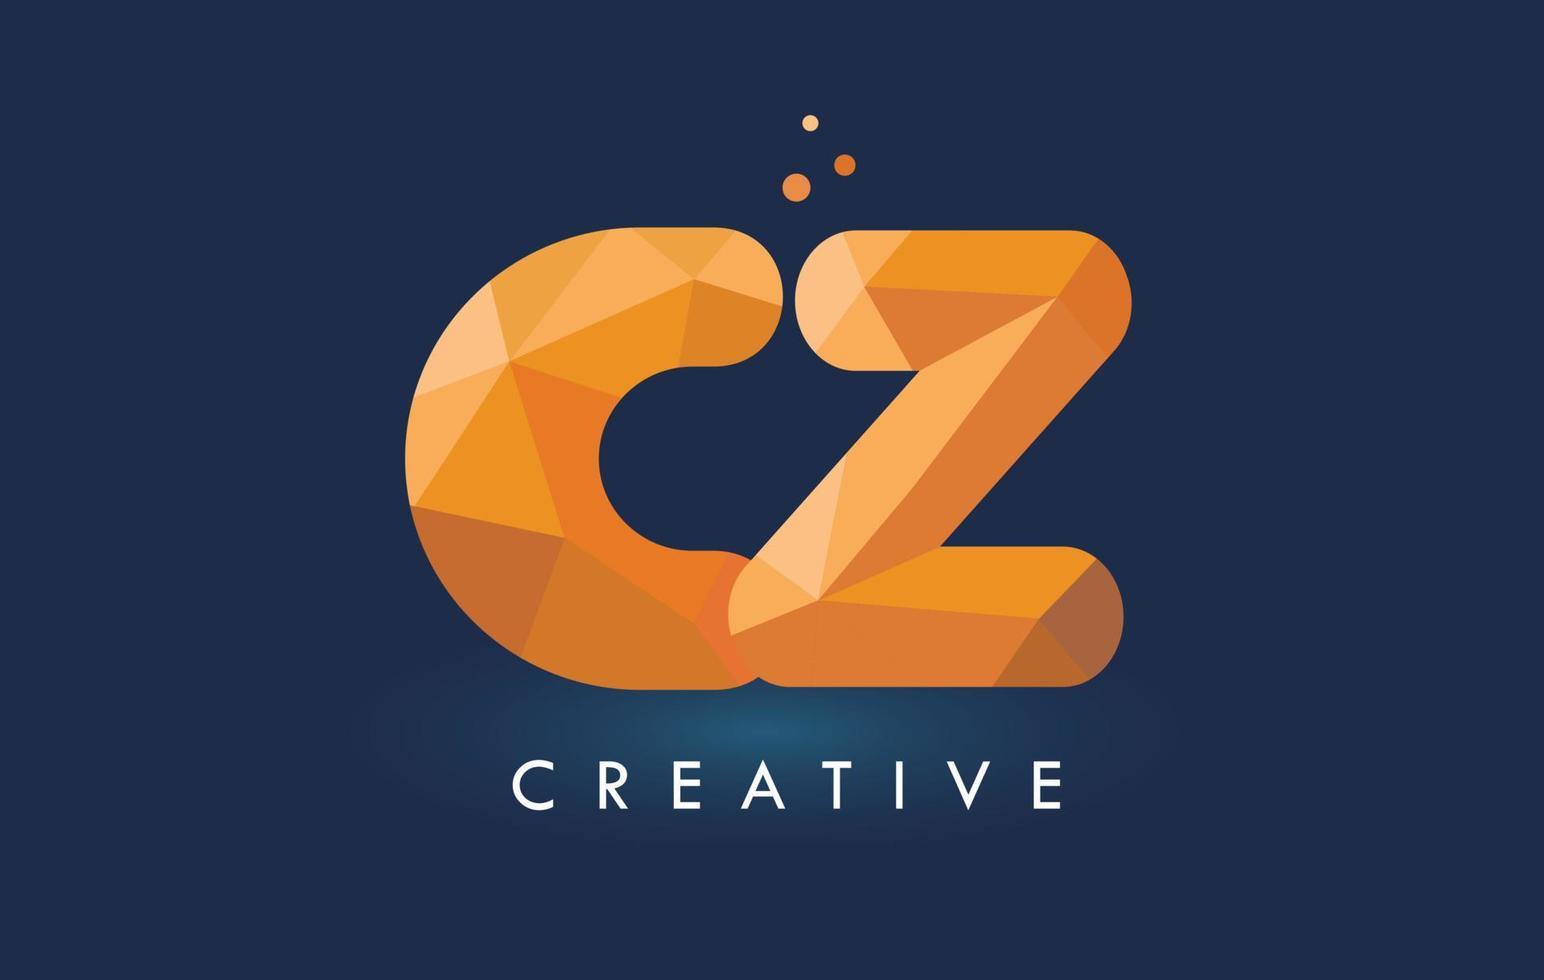 cz-Brief mit Origami-Dreieck-Logo. kreatives gelb-oranges Origami-Design. vektor